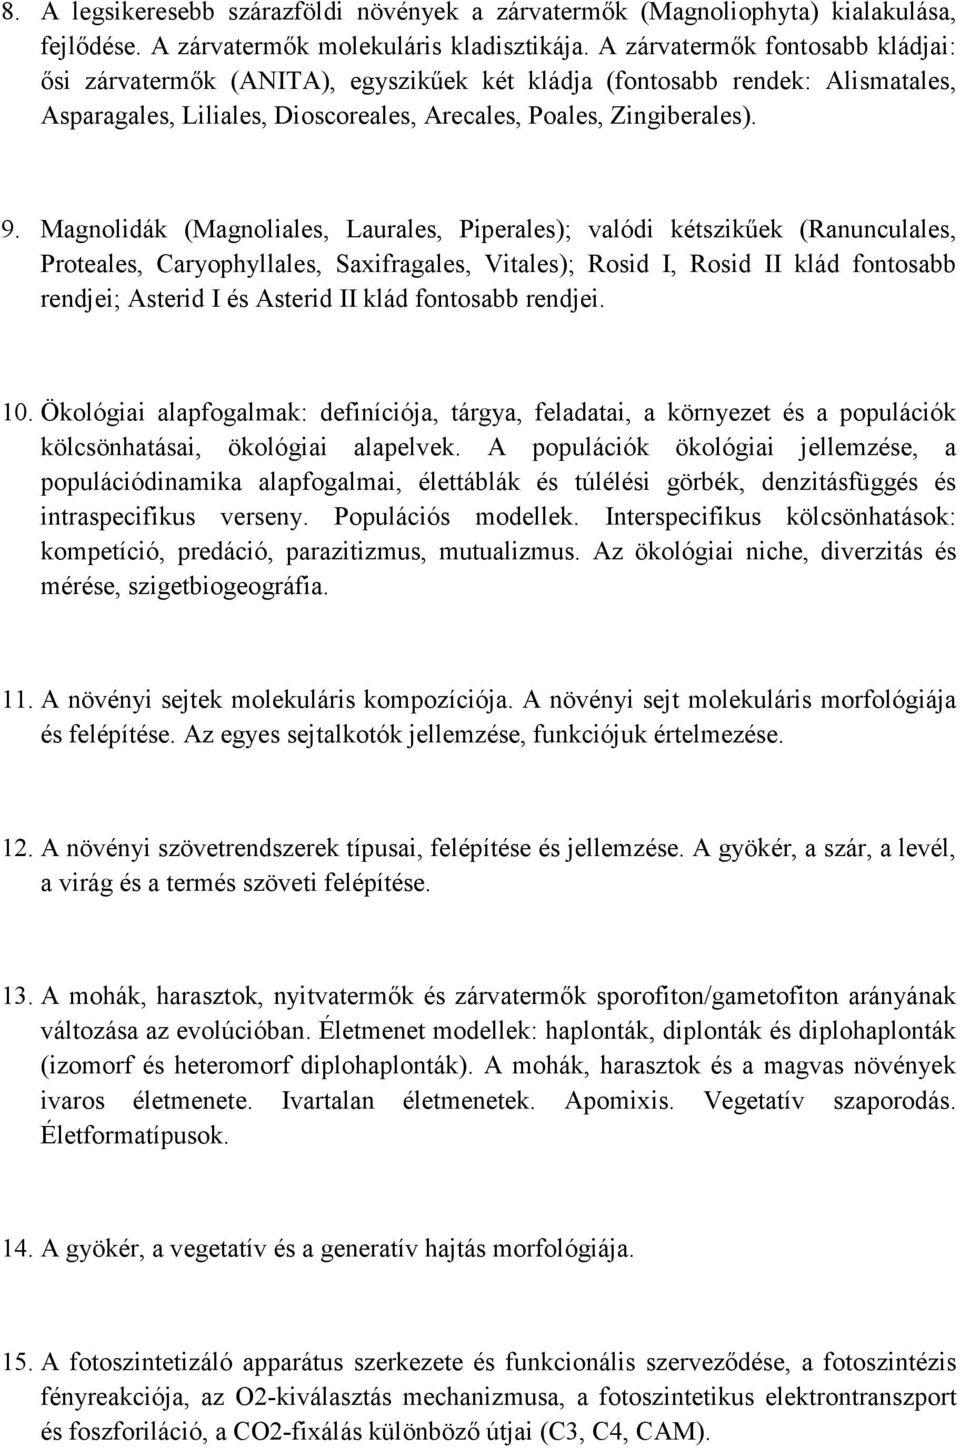 Magnolidák (Magnoliales, Laurales, Piperales); valódi kétszikűek (Ranunculales, Proteales, Caryophyllales, Saxifragales, Vitales); Rosid I, Rosid II klád fontosabb rendjei; Asterid I és Asterid II